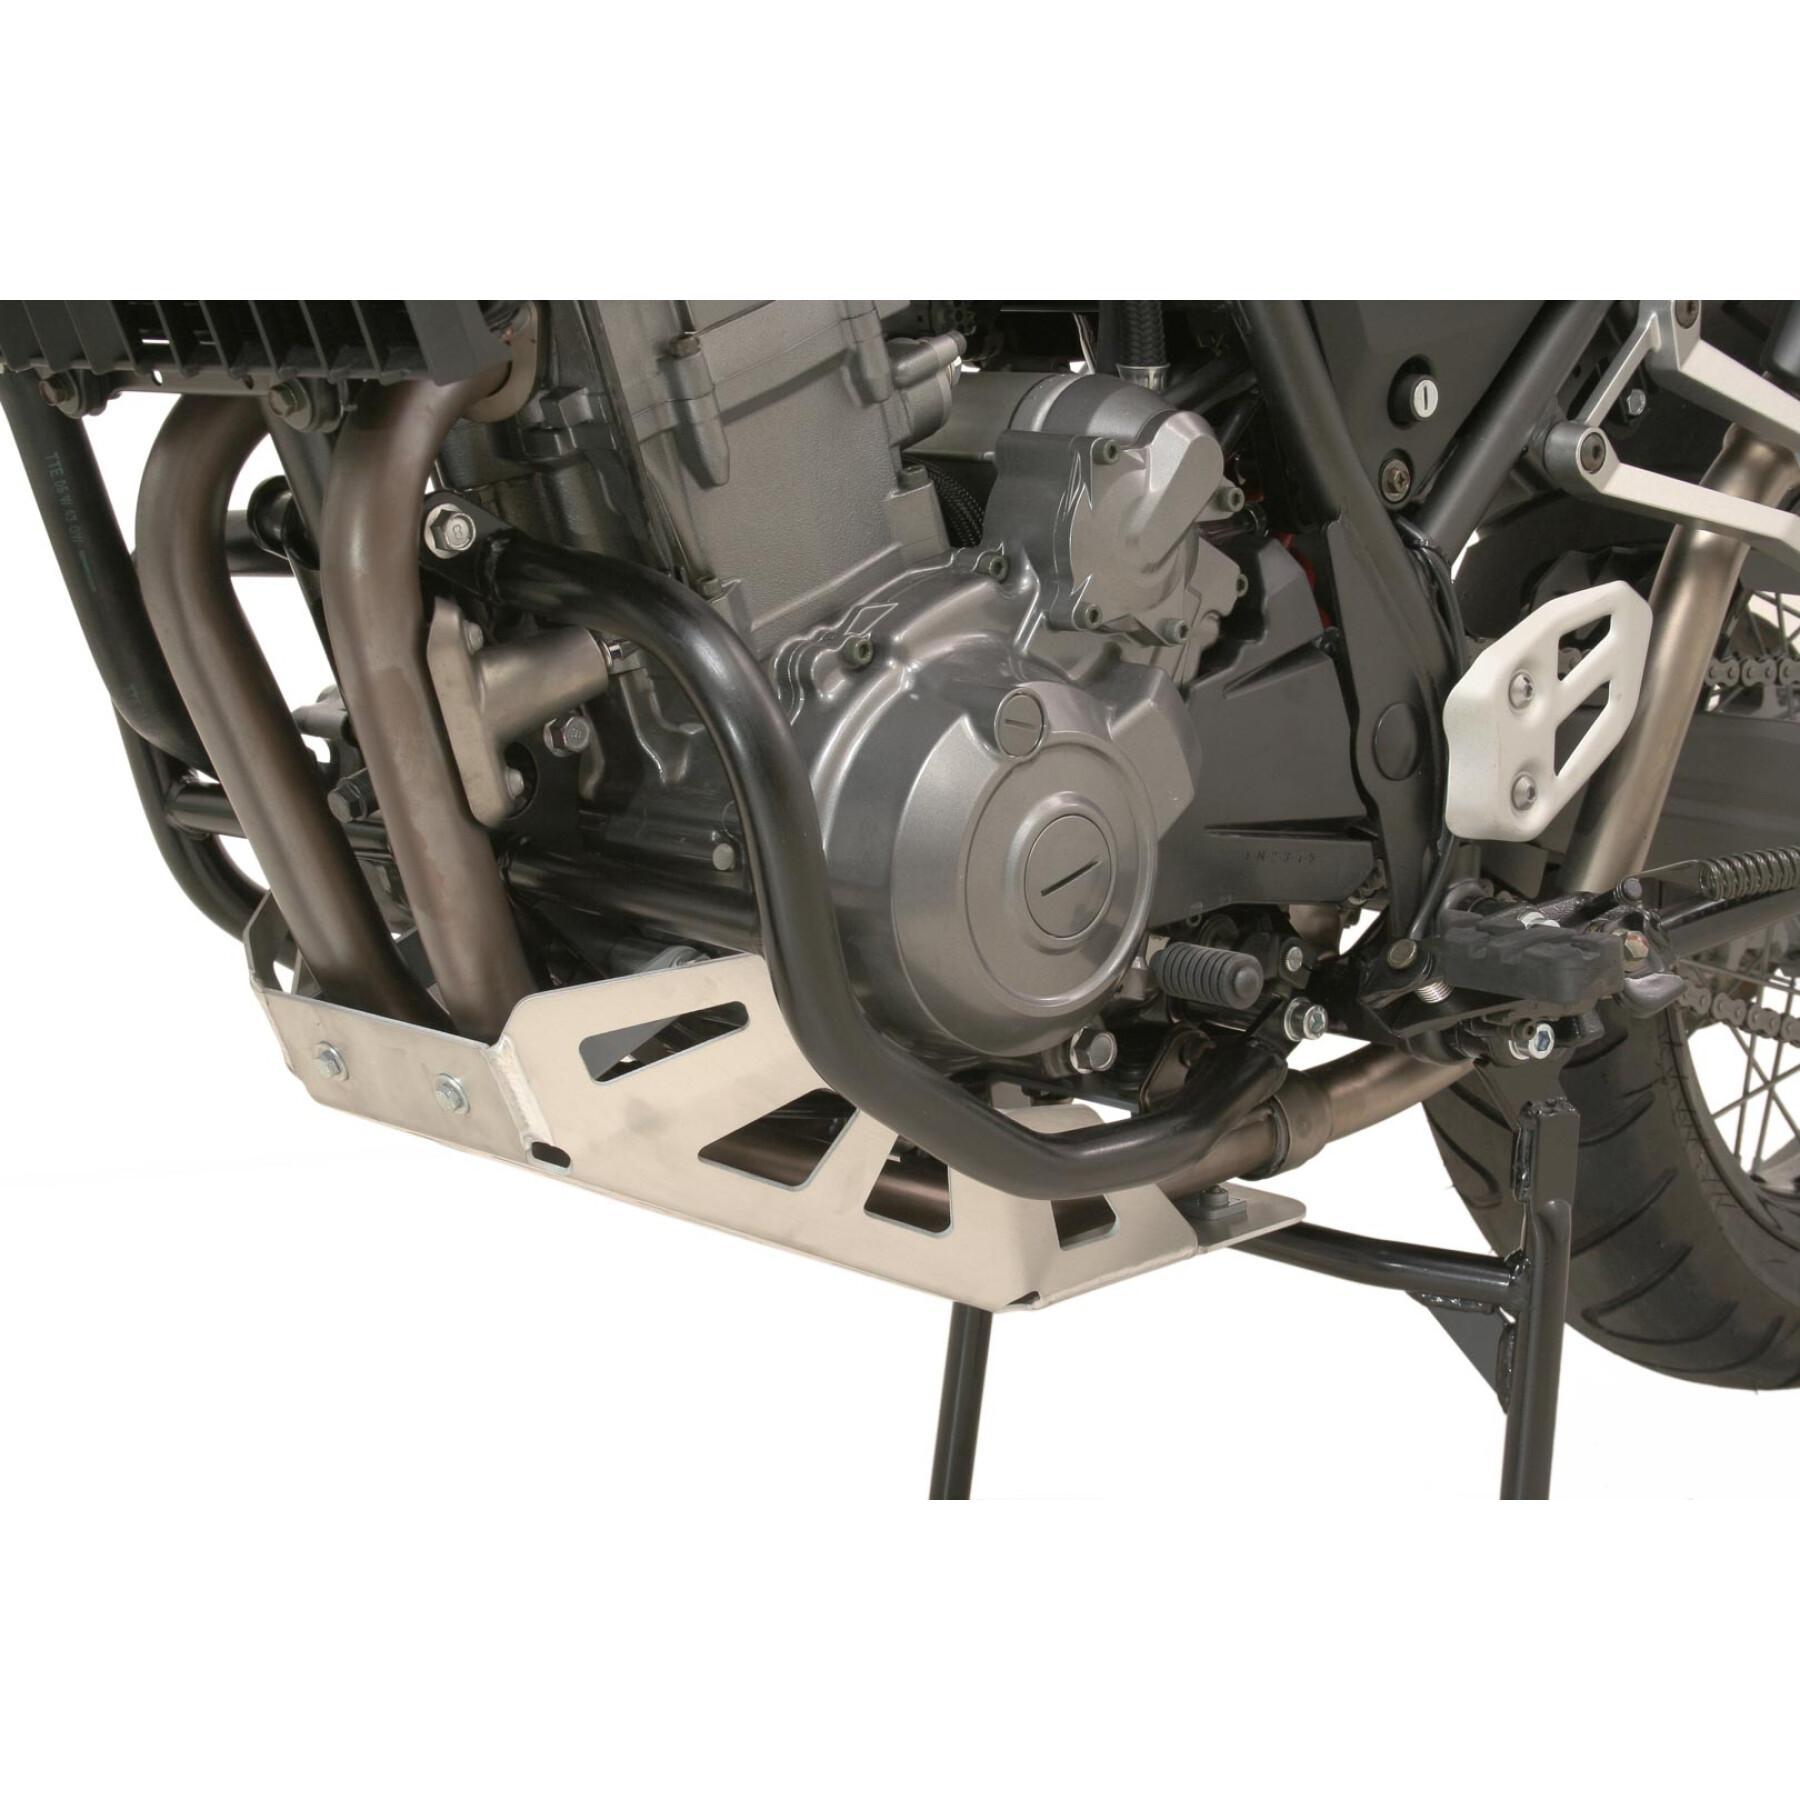 Protezioni per moto Sw-Motech Crashbar Yamaha Xt 660 R / X (04-)